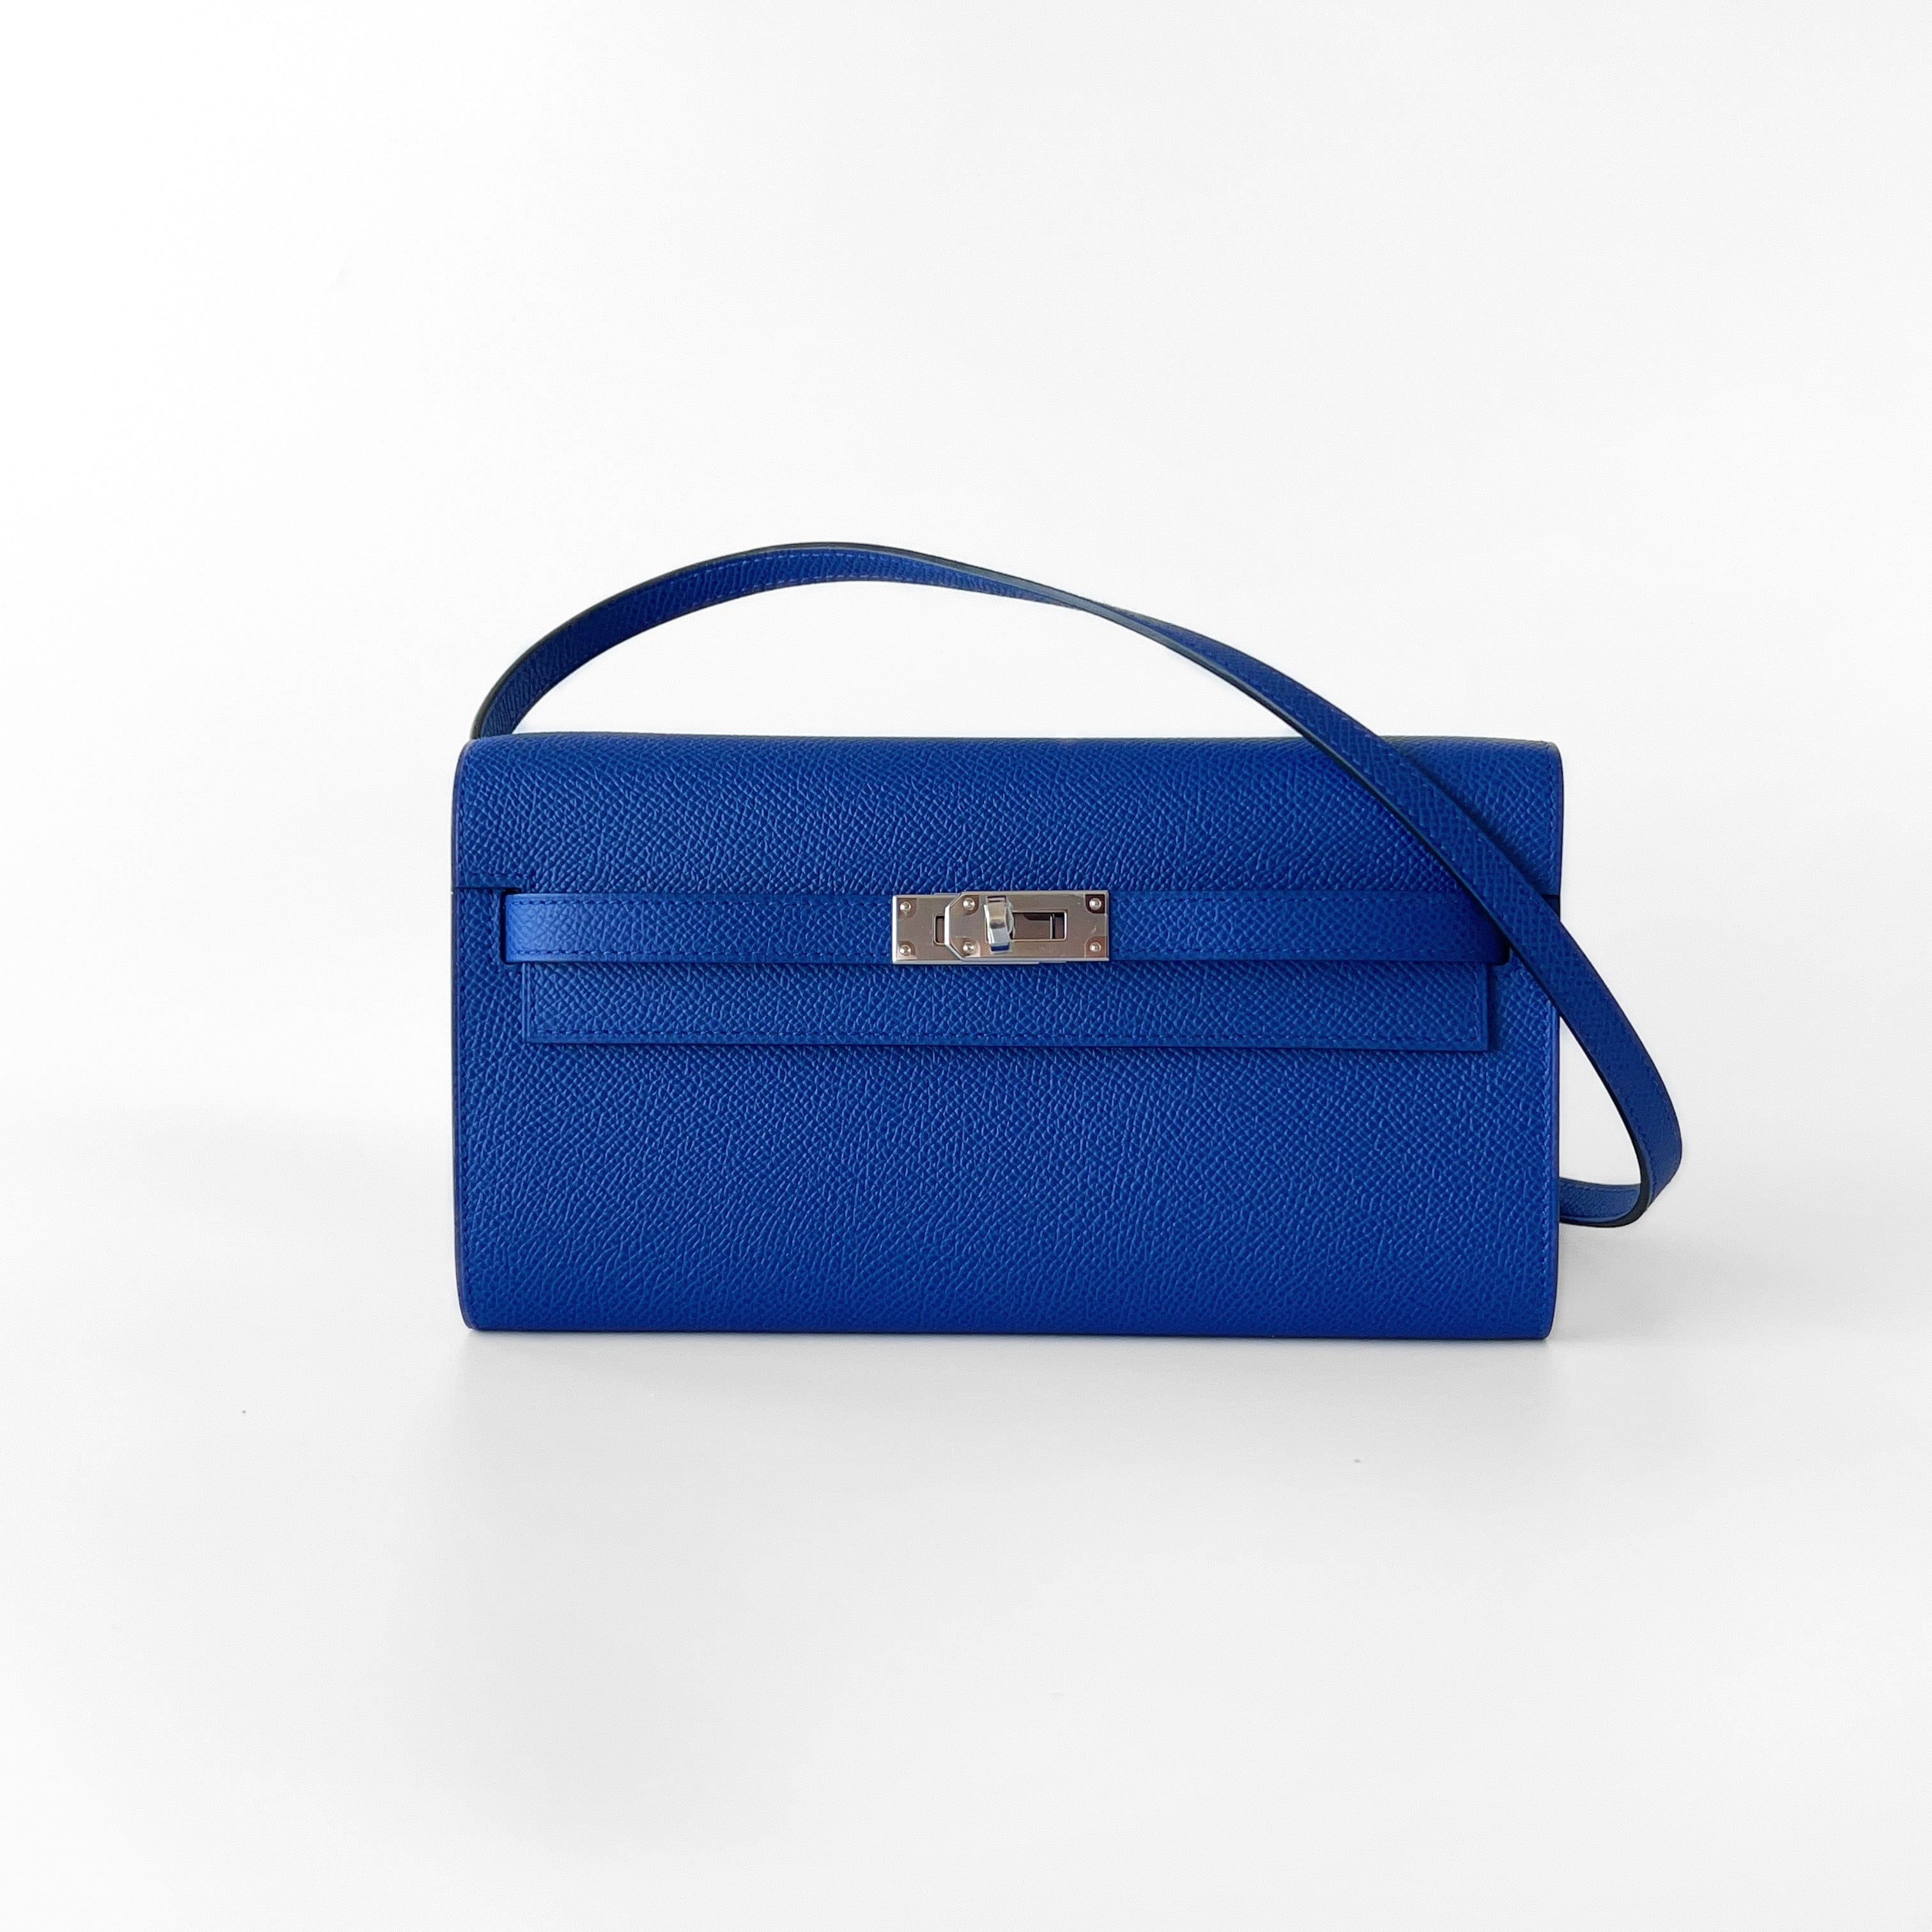 Inspired Bag  Hermes Kelly Wallet To Go 